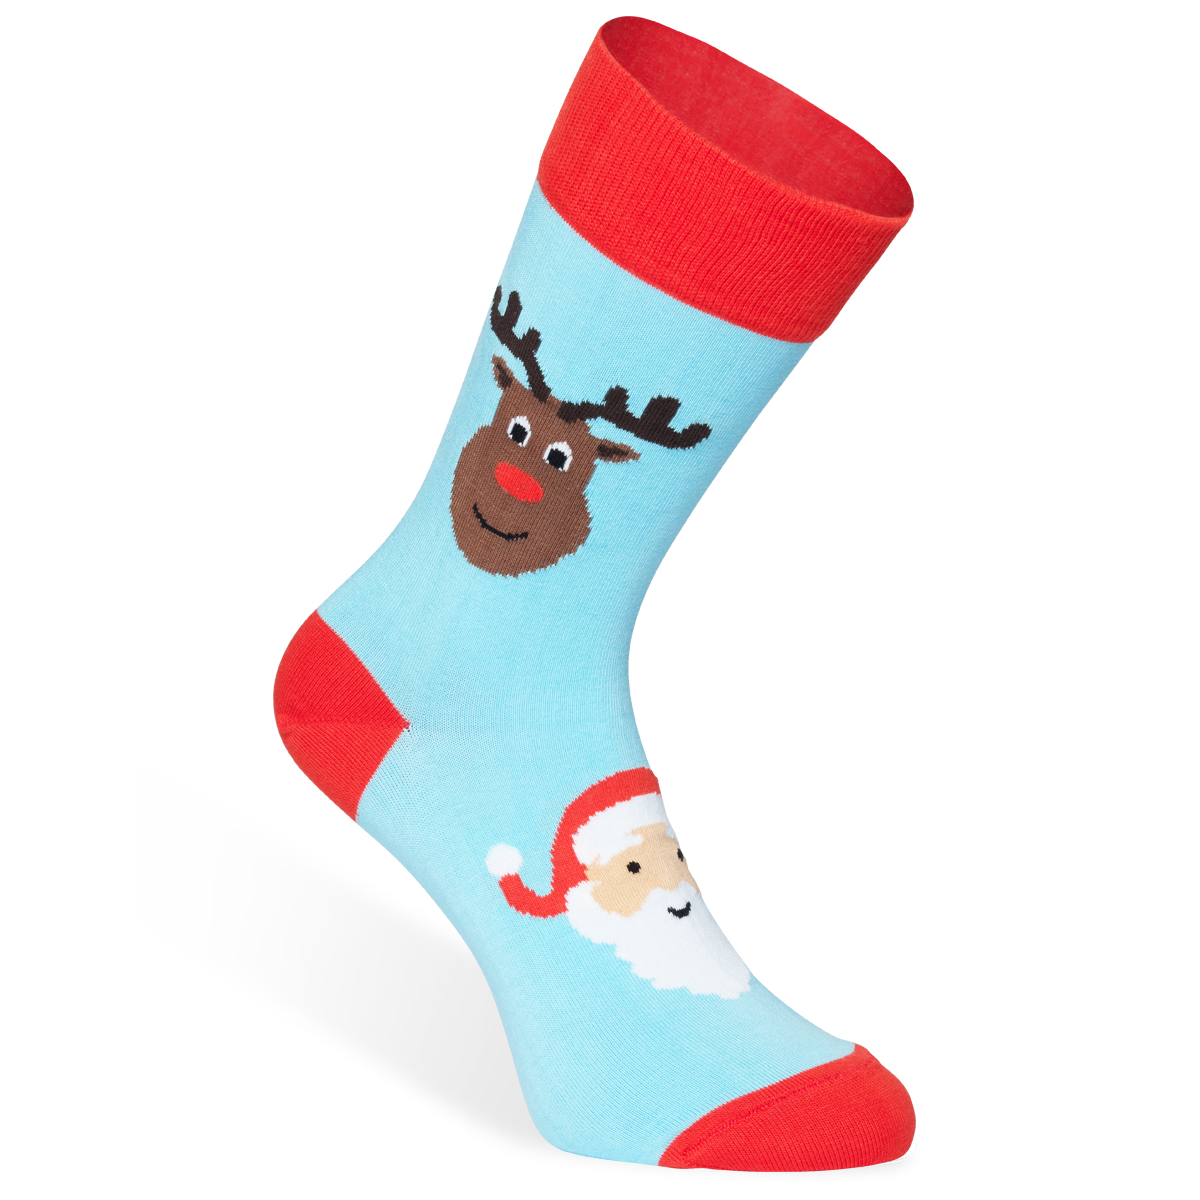 E-shop Slippsy Santa socks / 35-38